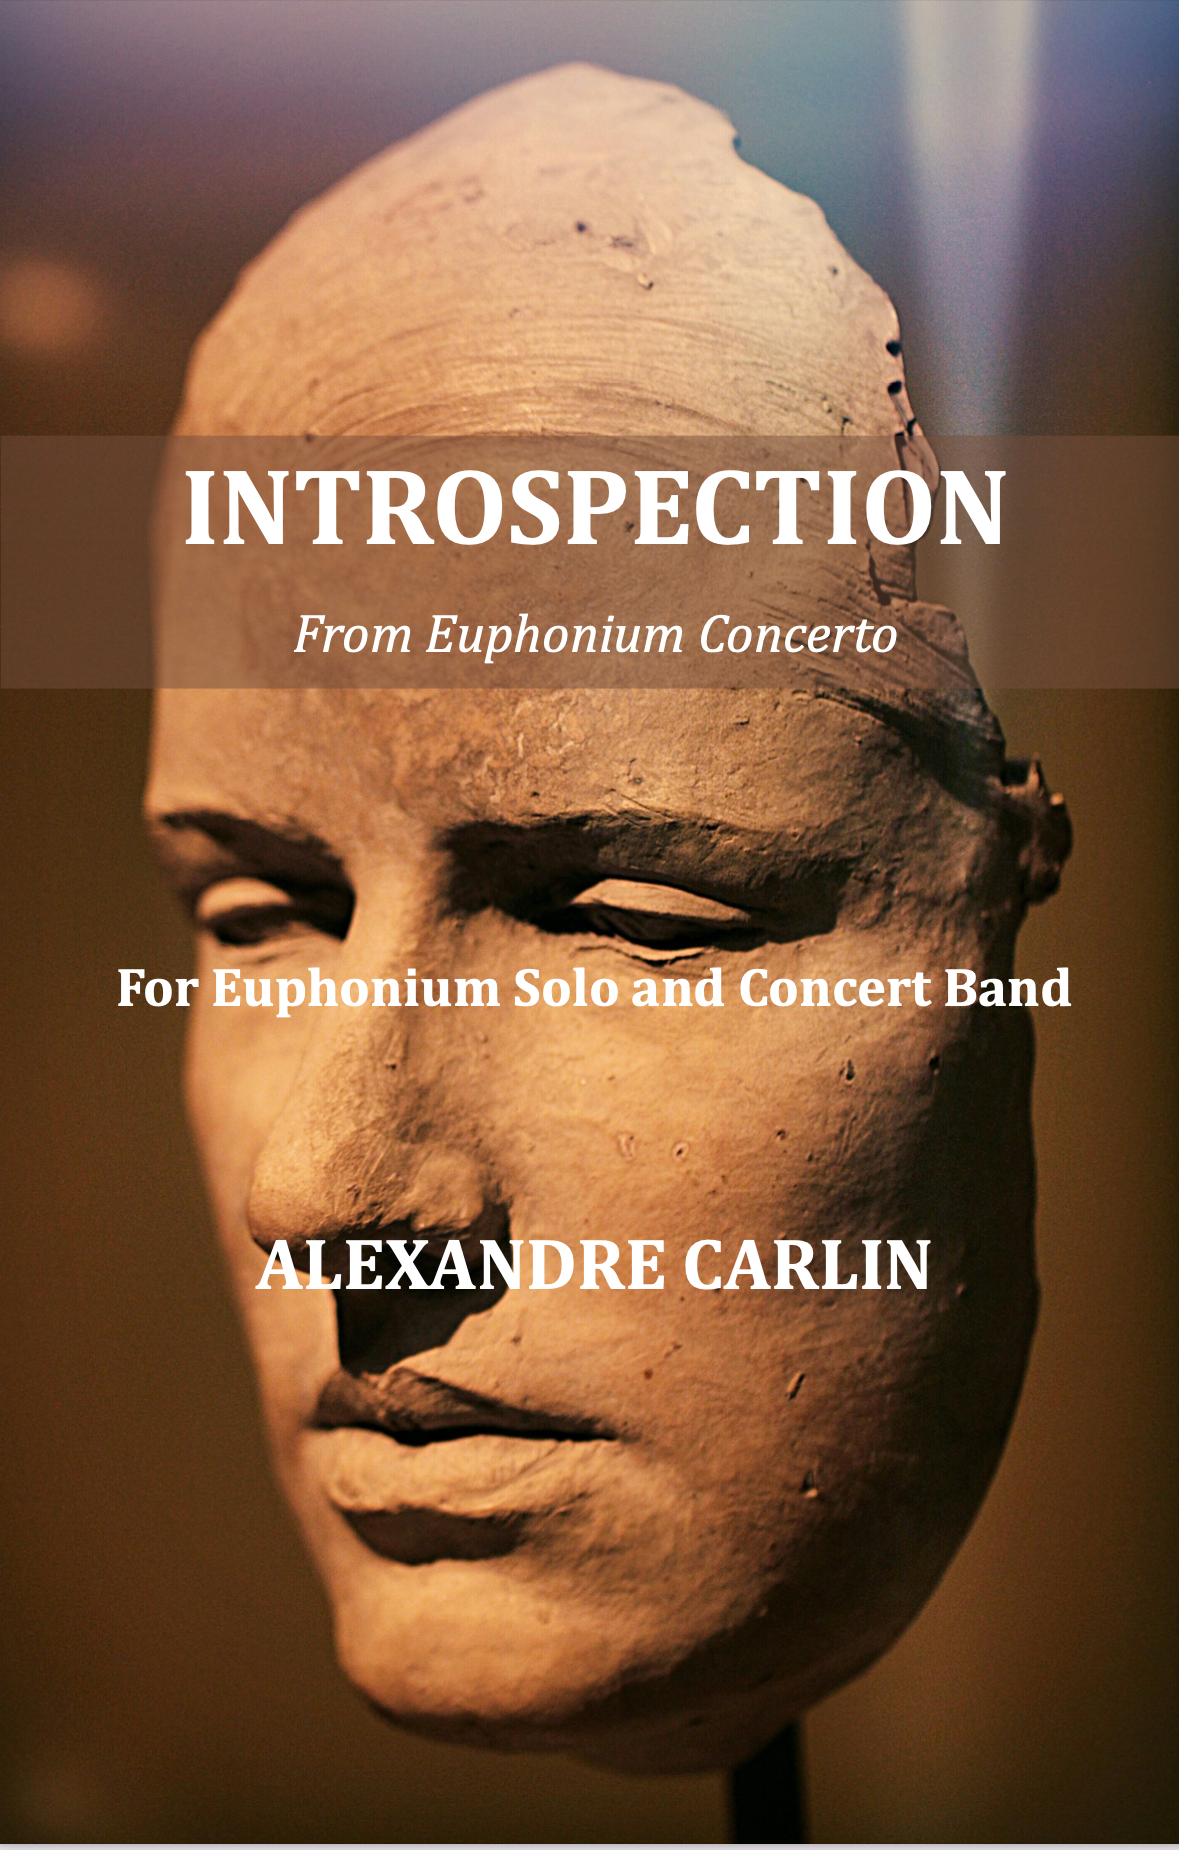 Introspection by Alexandre Carlin